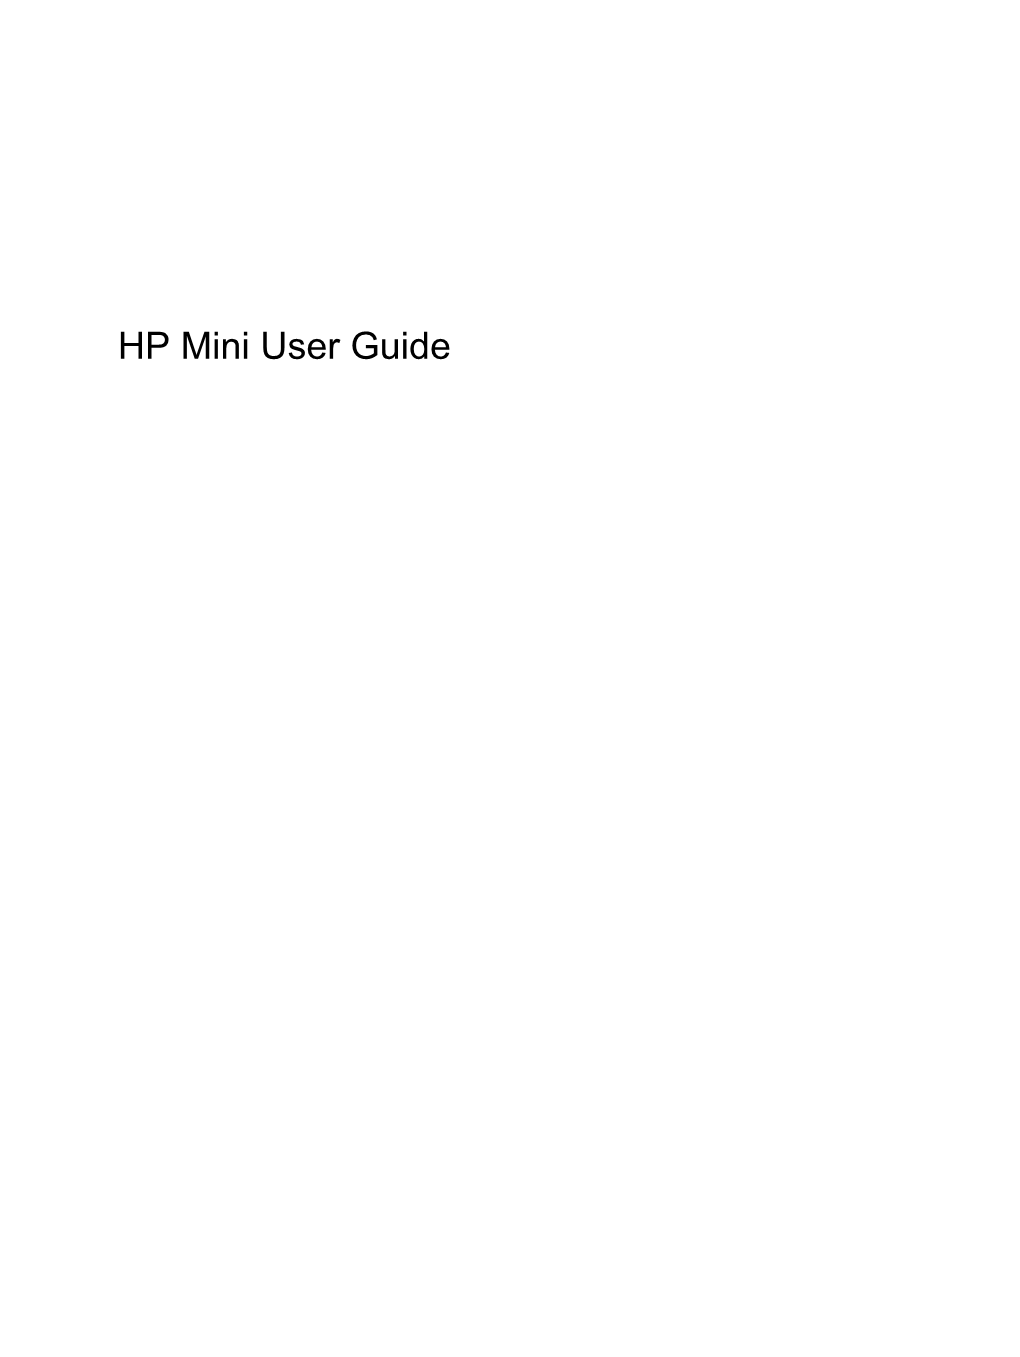 HP Mini User Guide © Copyright 2009 Hewlett-Packard Product Notice Development Company, L.P